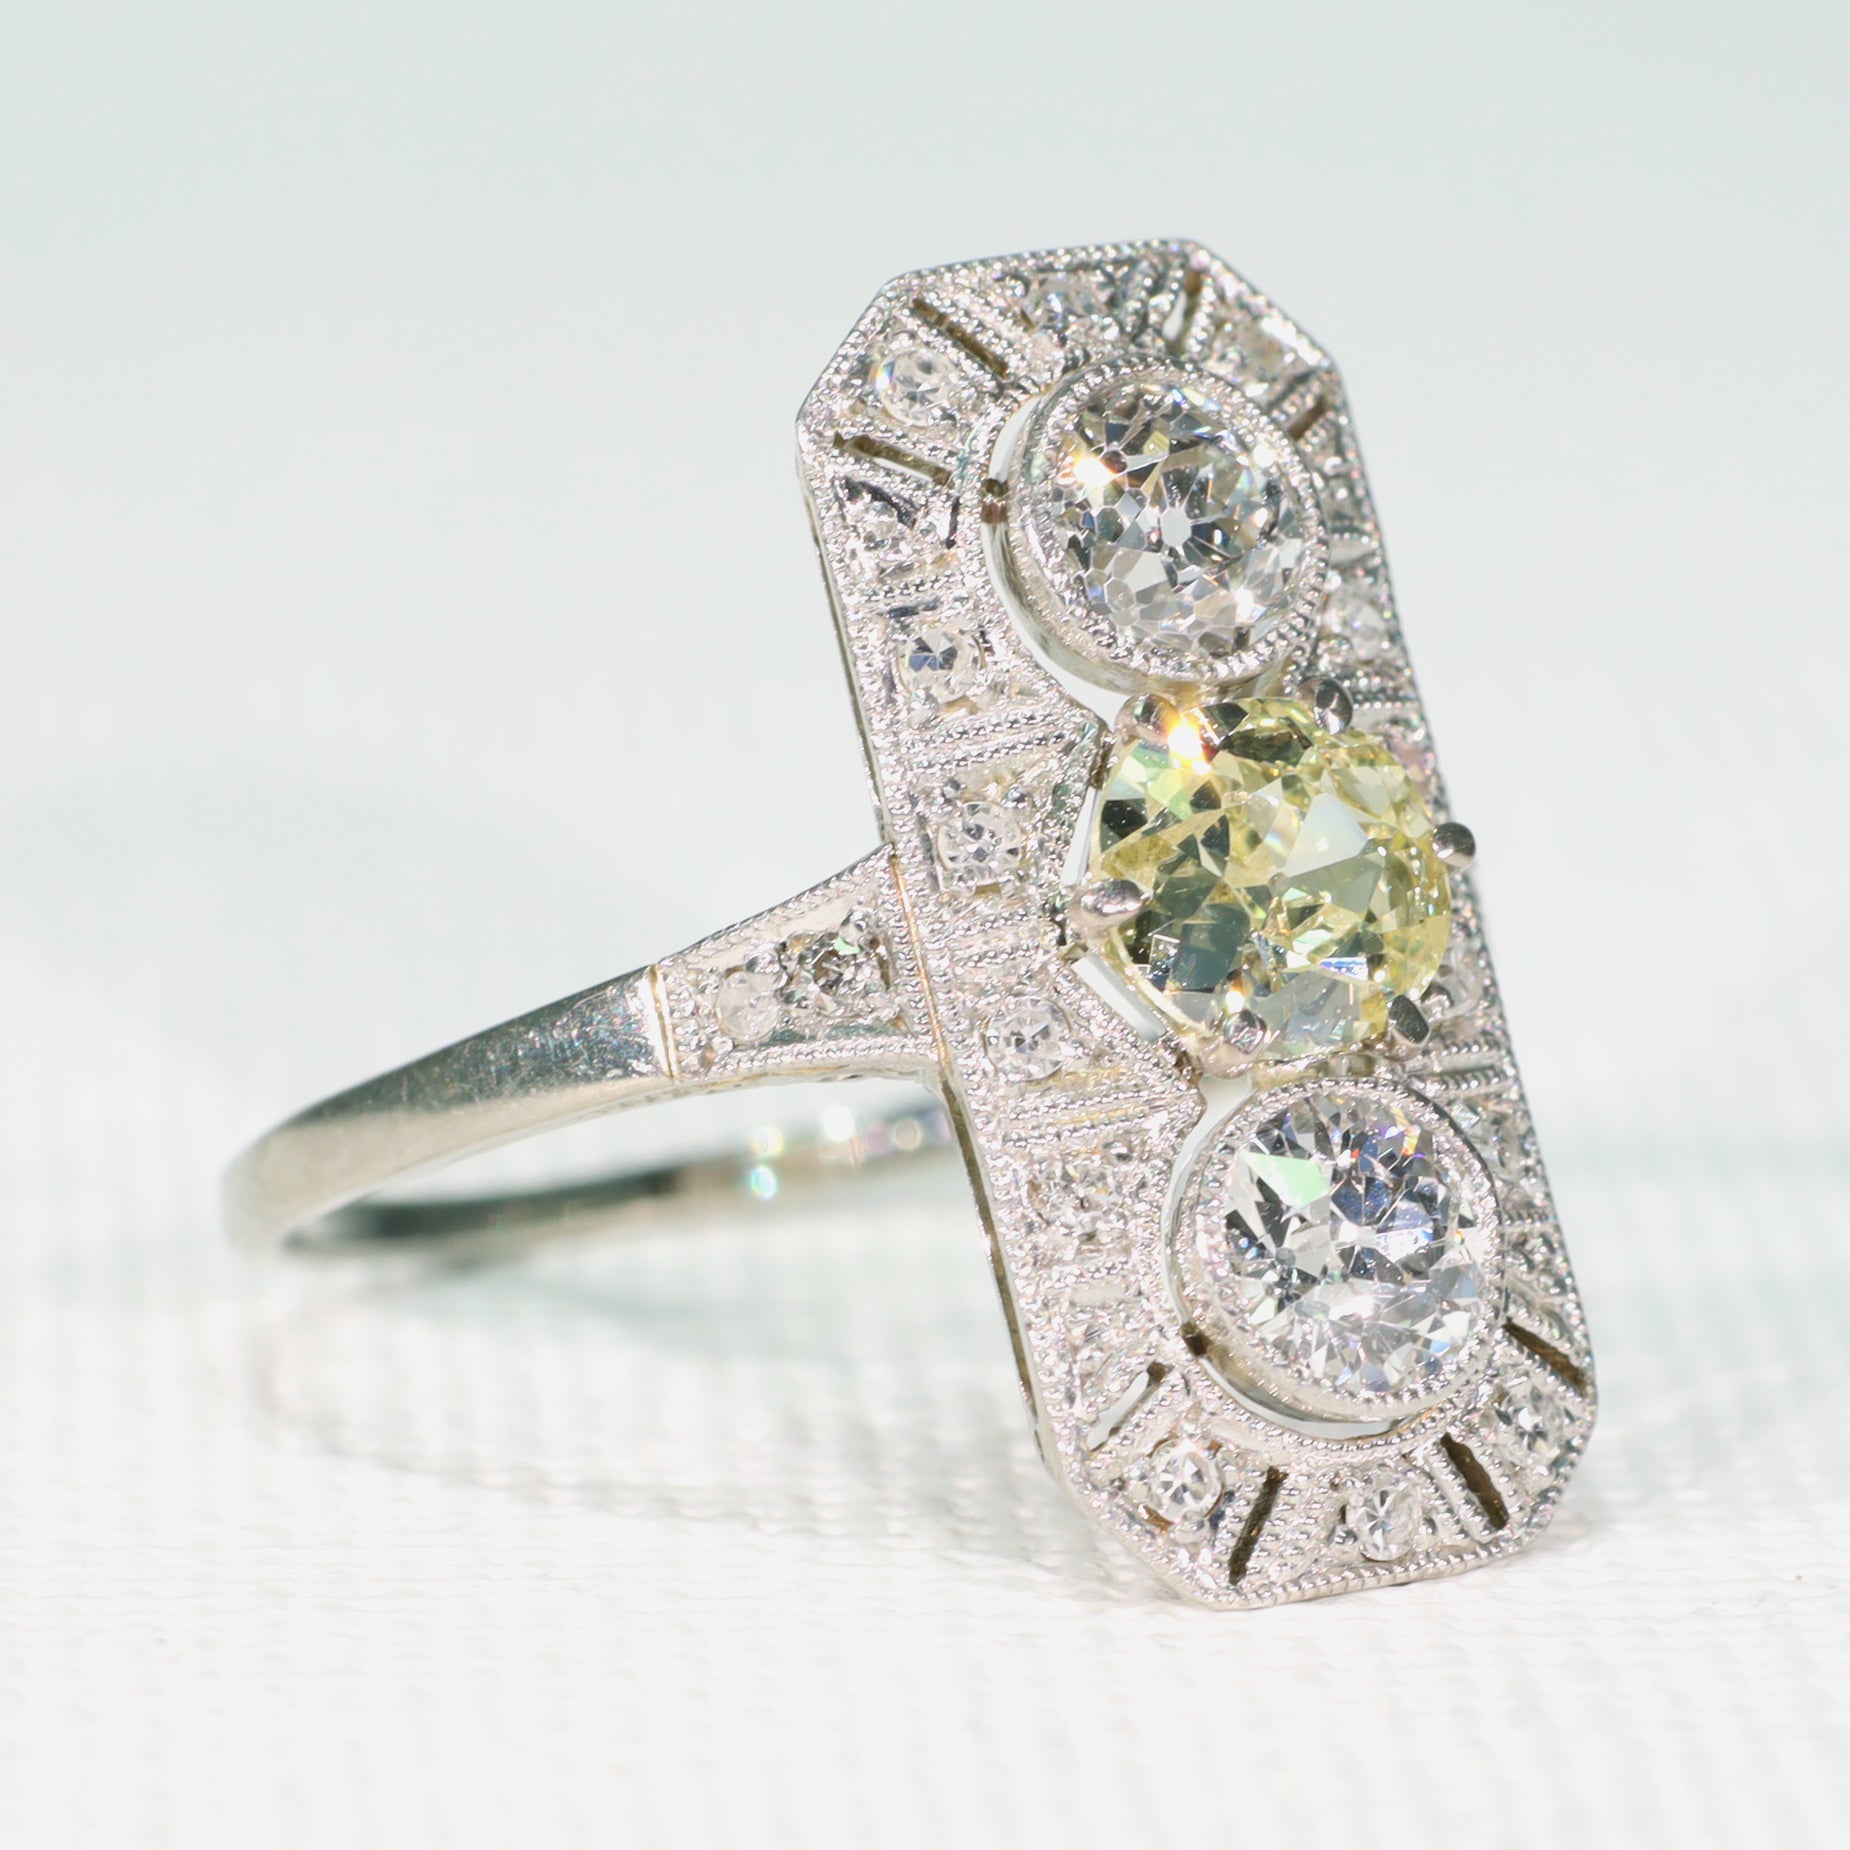 Antique Art Deco Yellow Diamond 3 Stone Ring Engagement Platinum